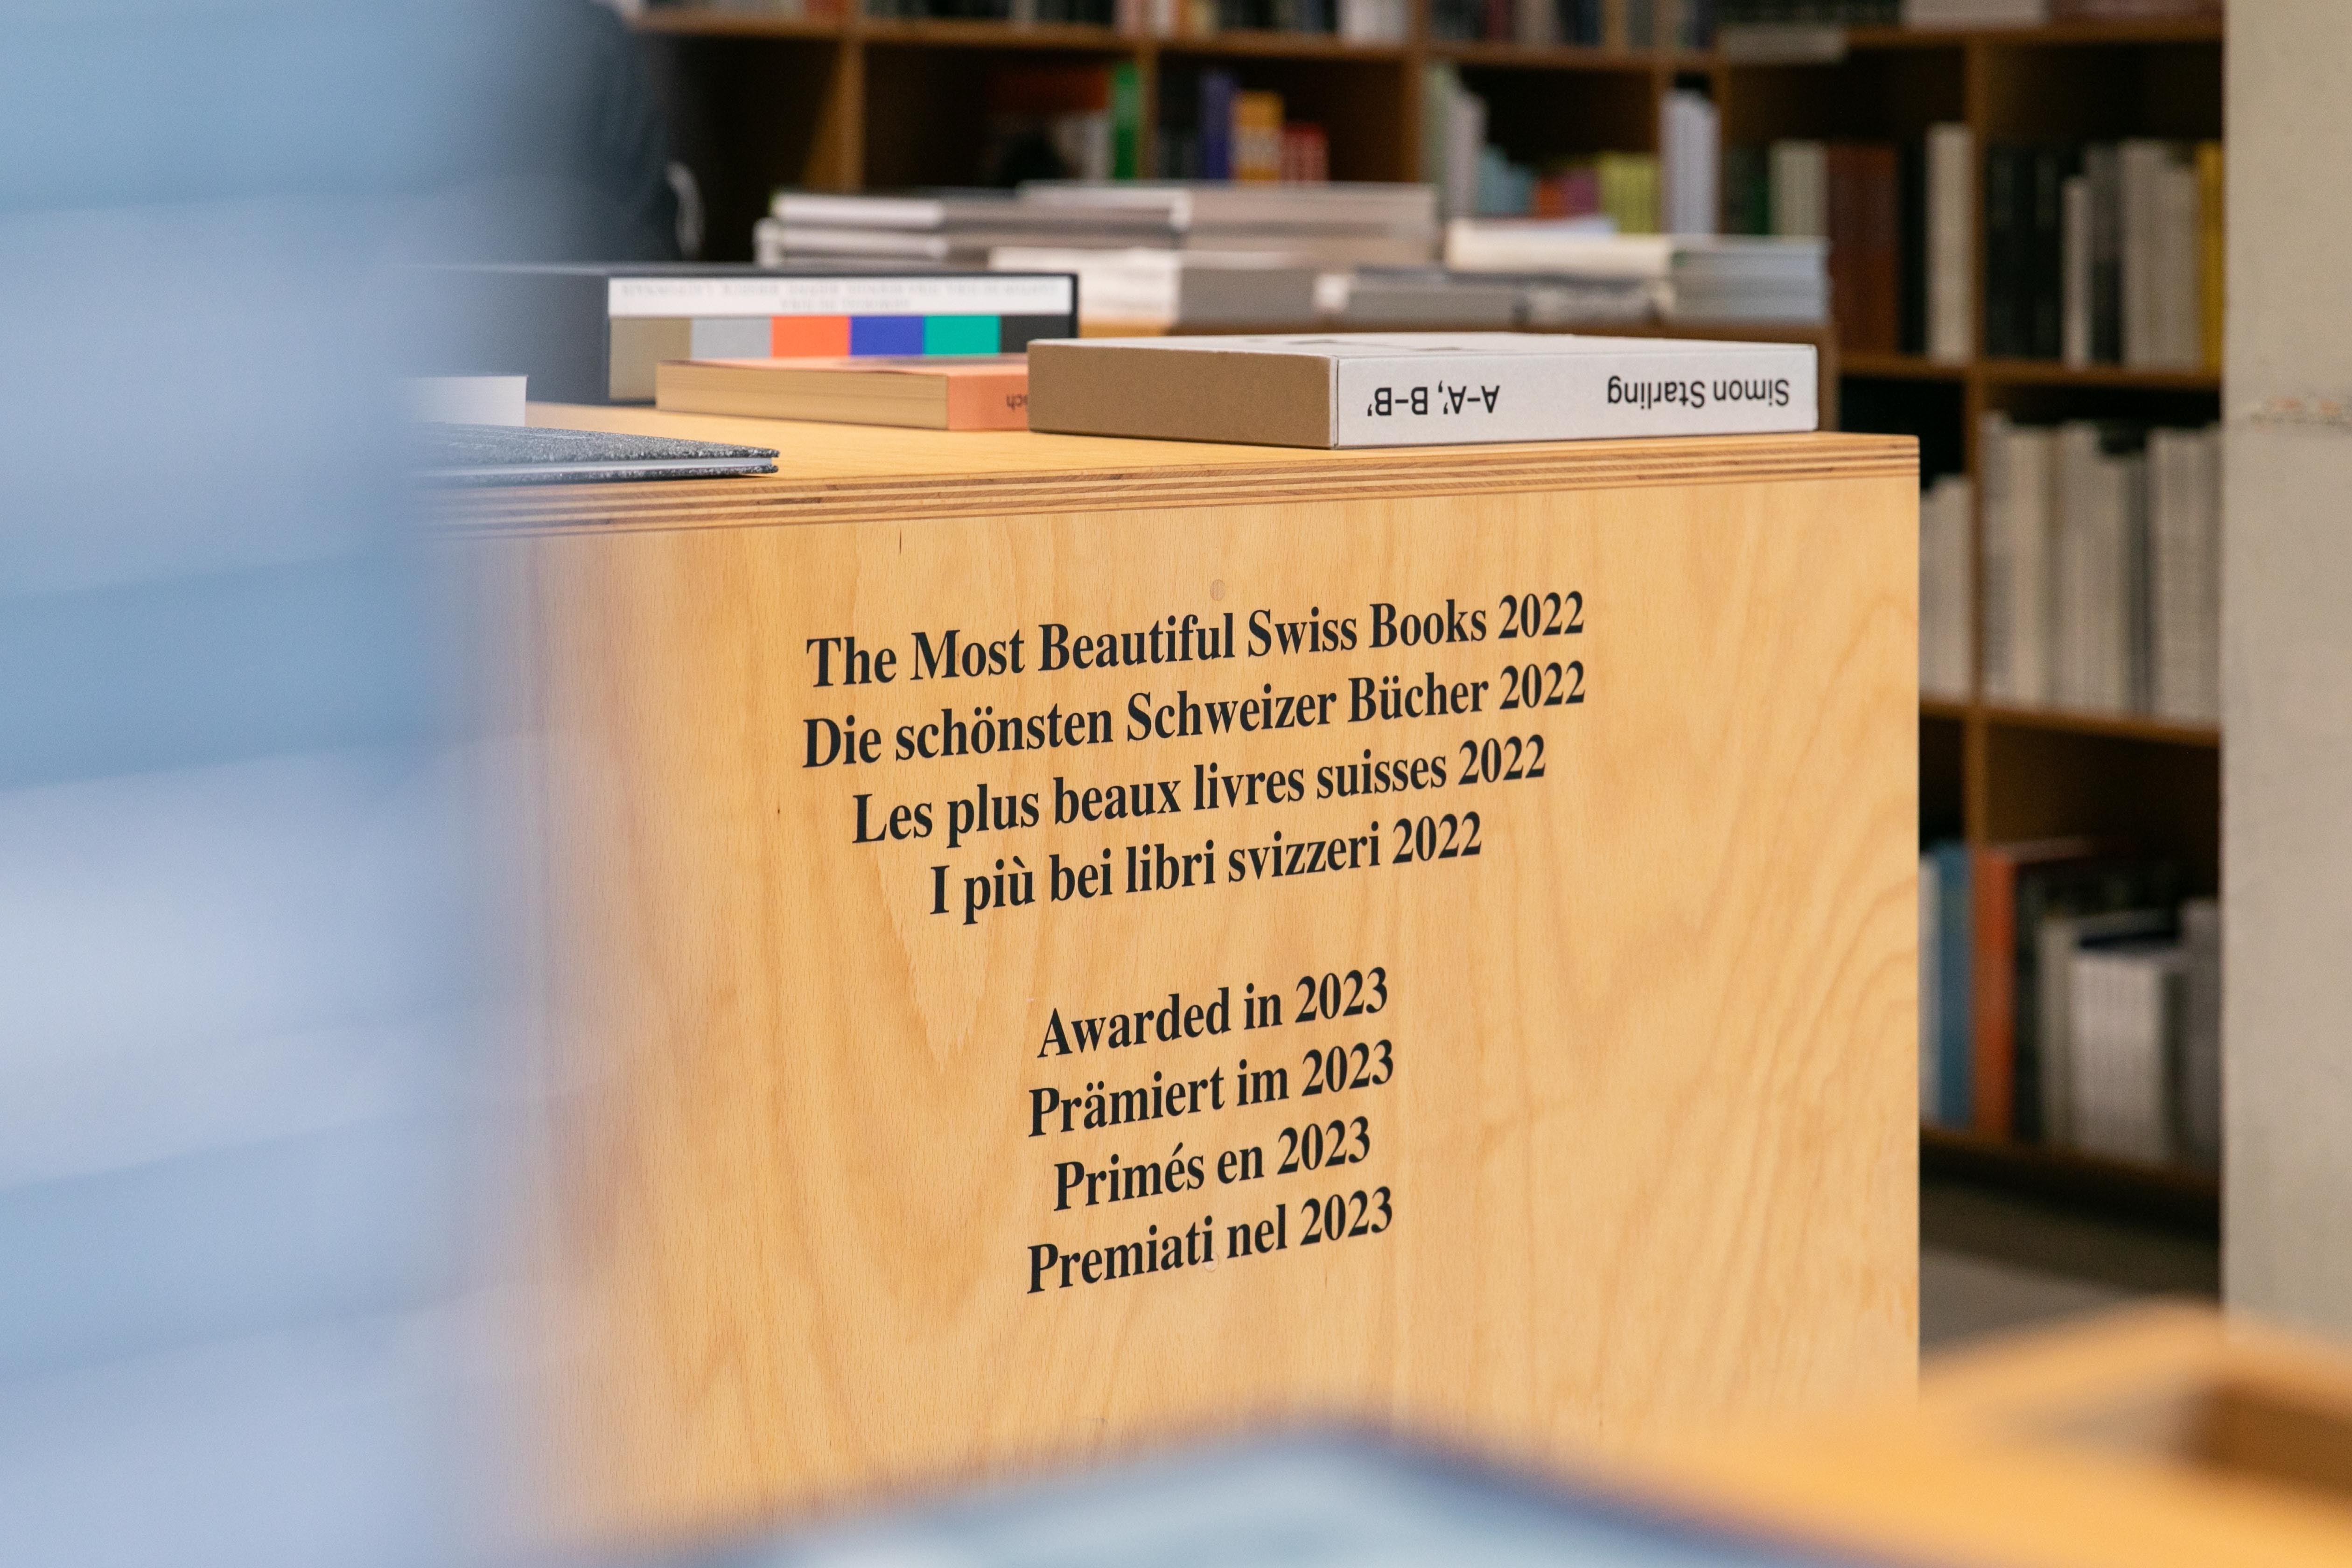 The Most Beautiful Swiss Books 2022